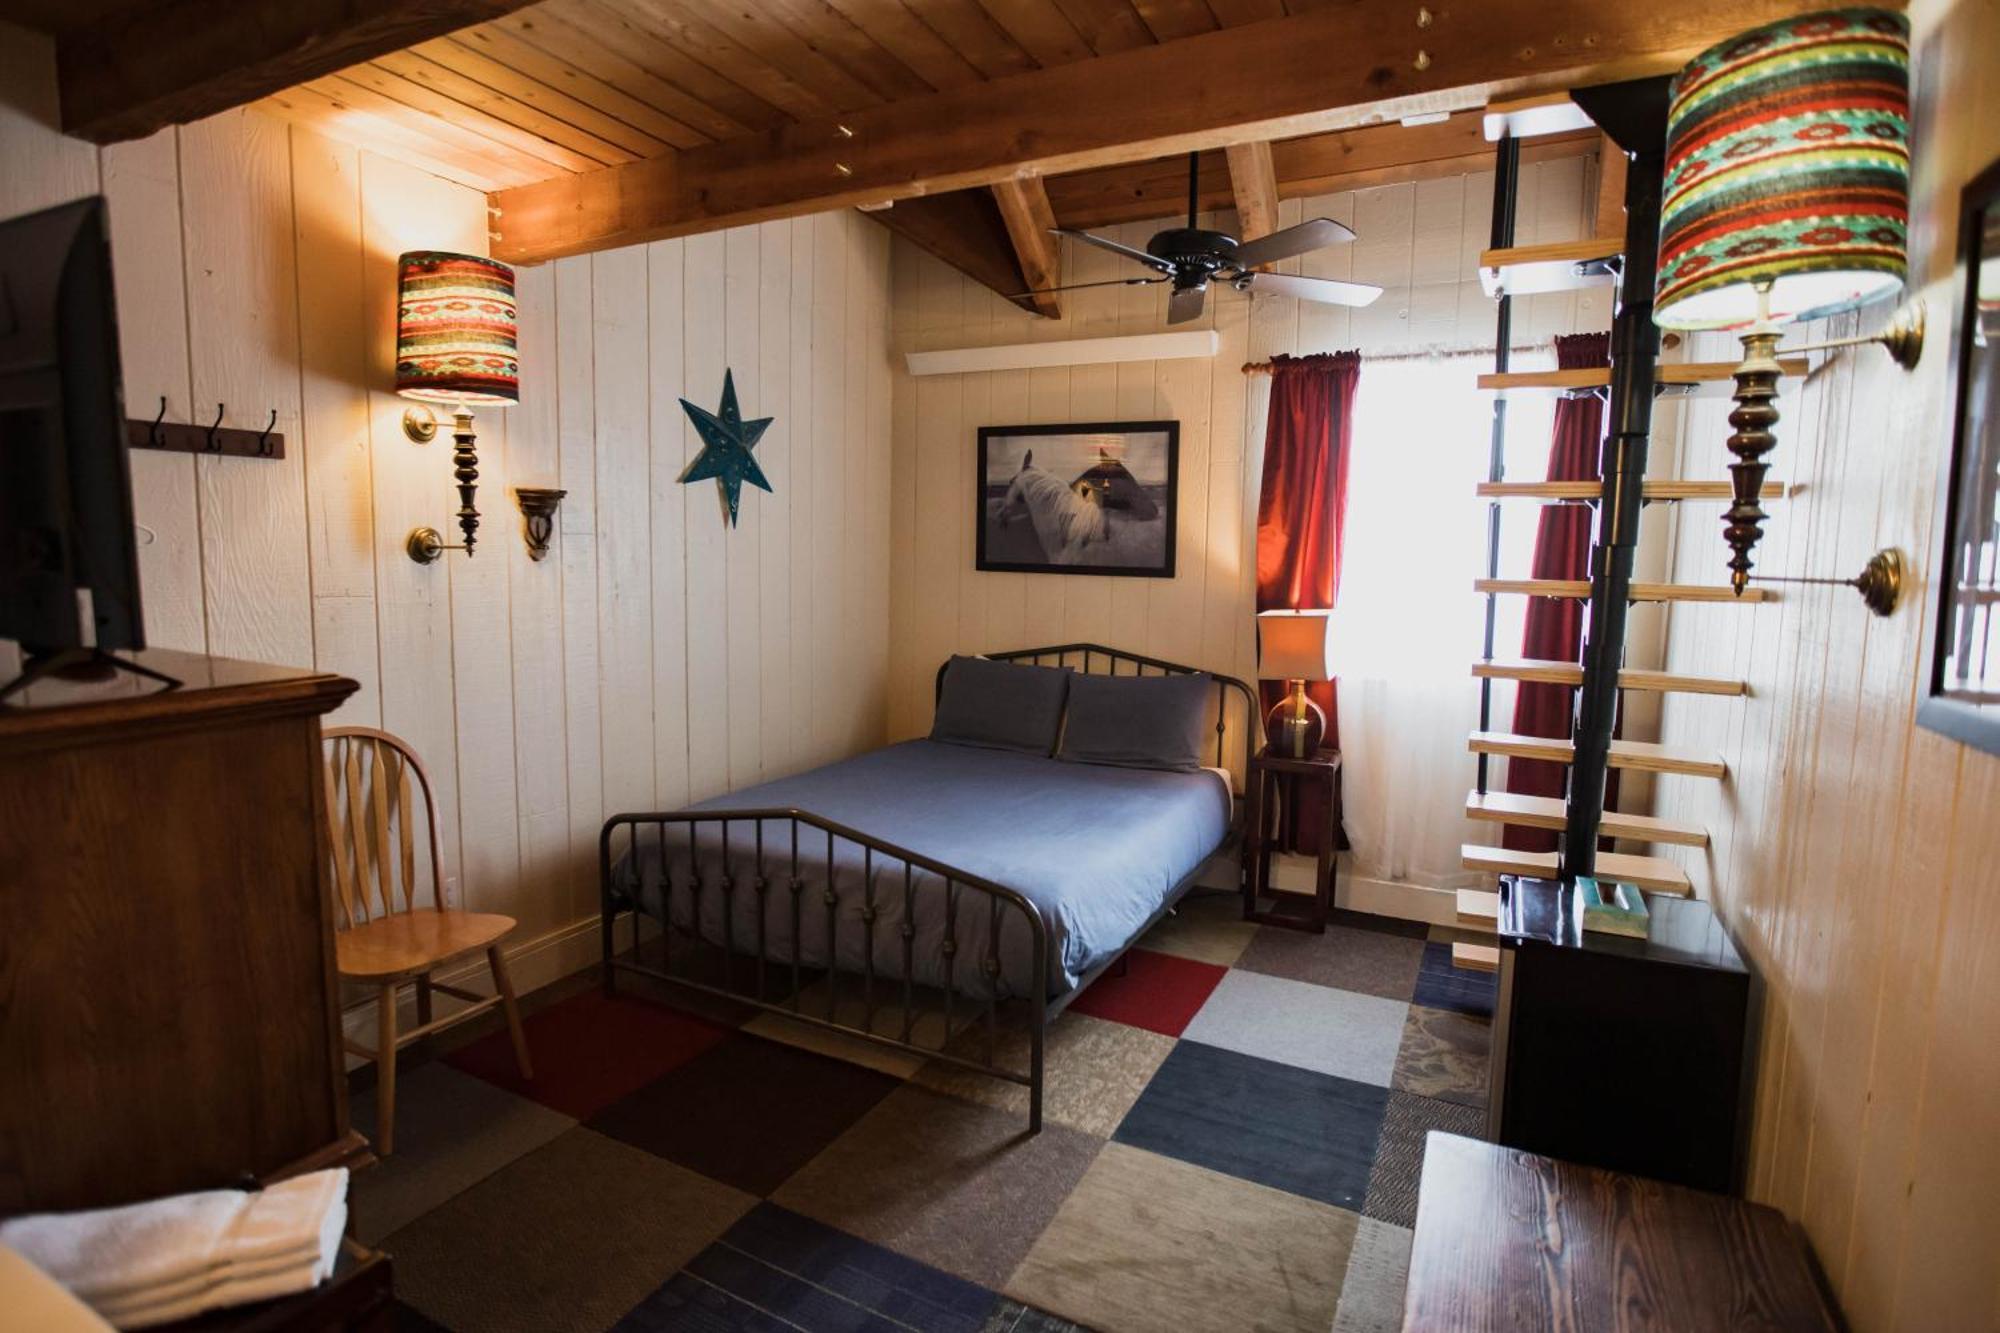 The Viking Lodge - Downtown Winter Park Colorado ภายนอก รูปภาพ